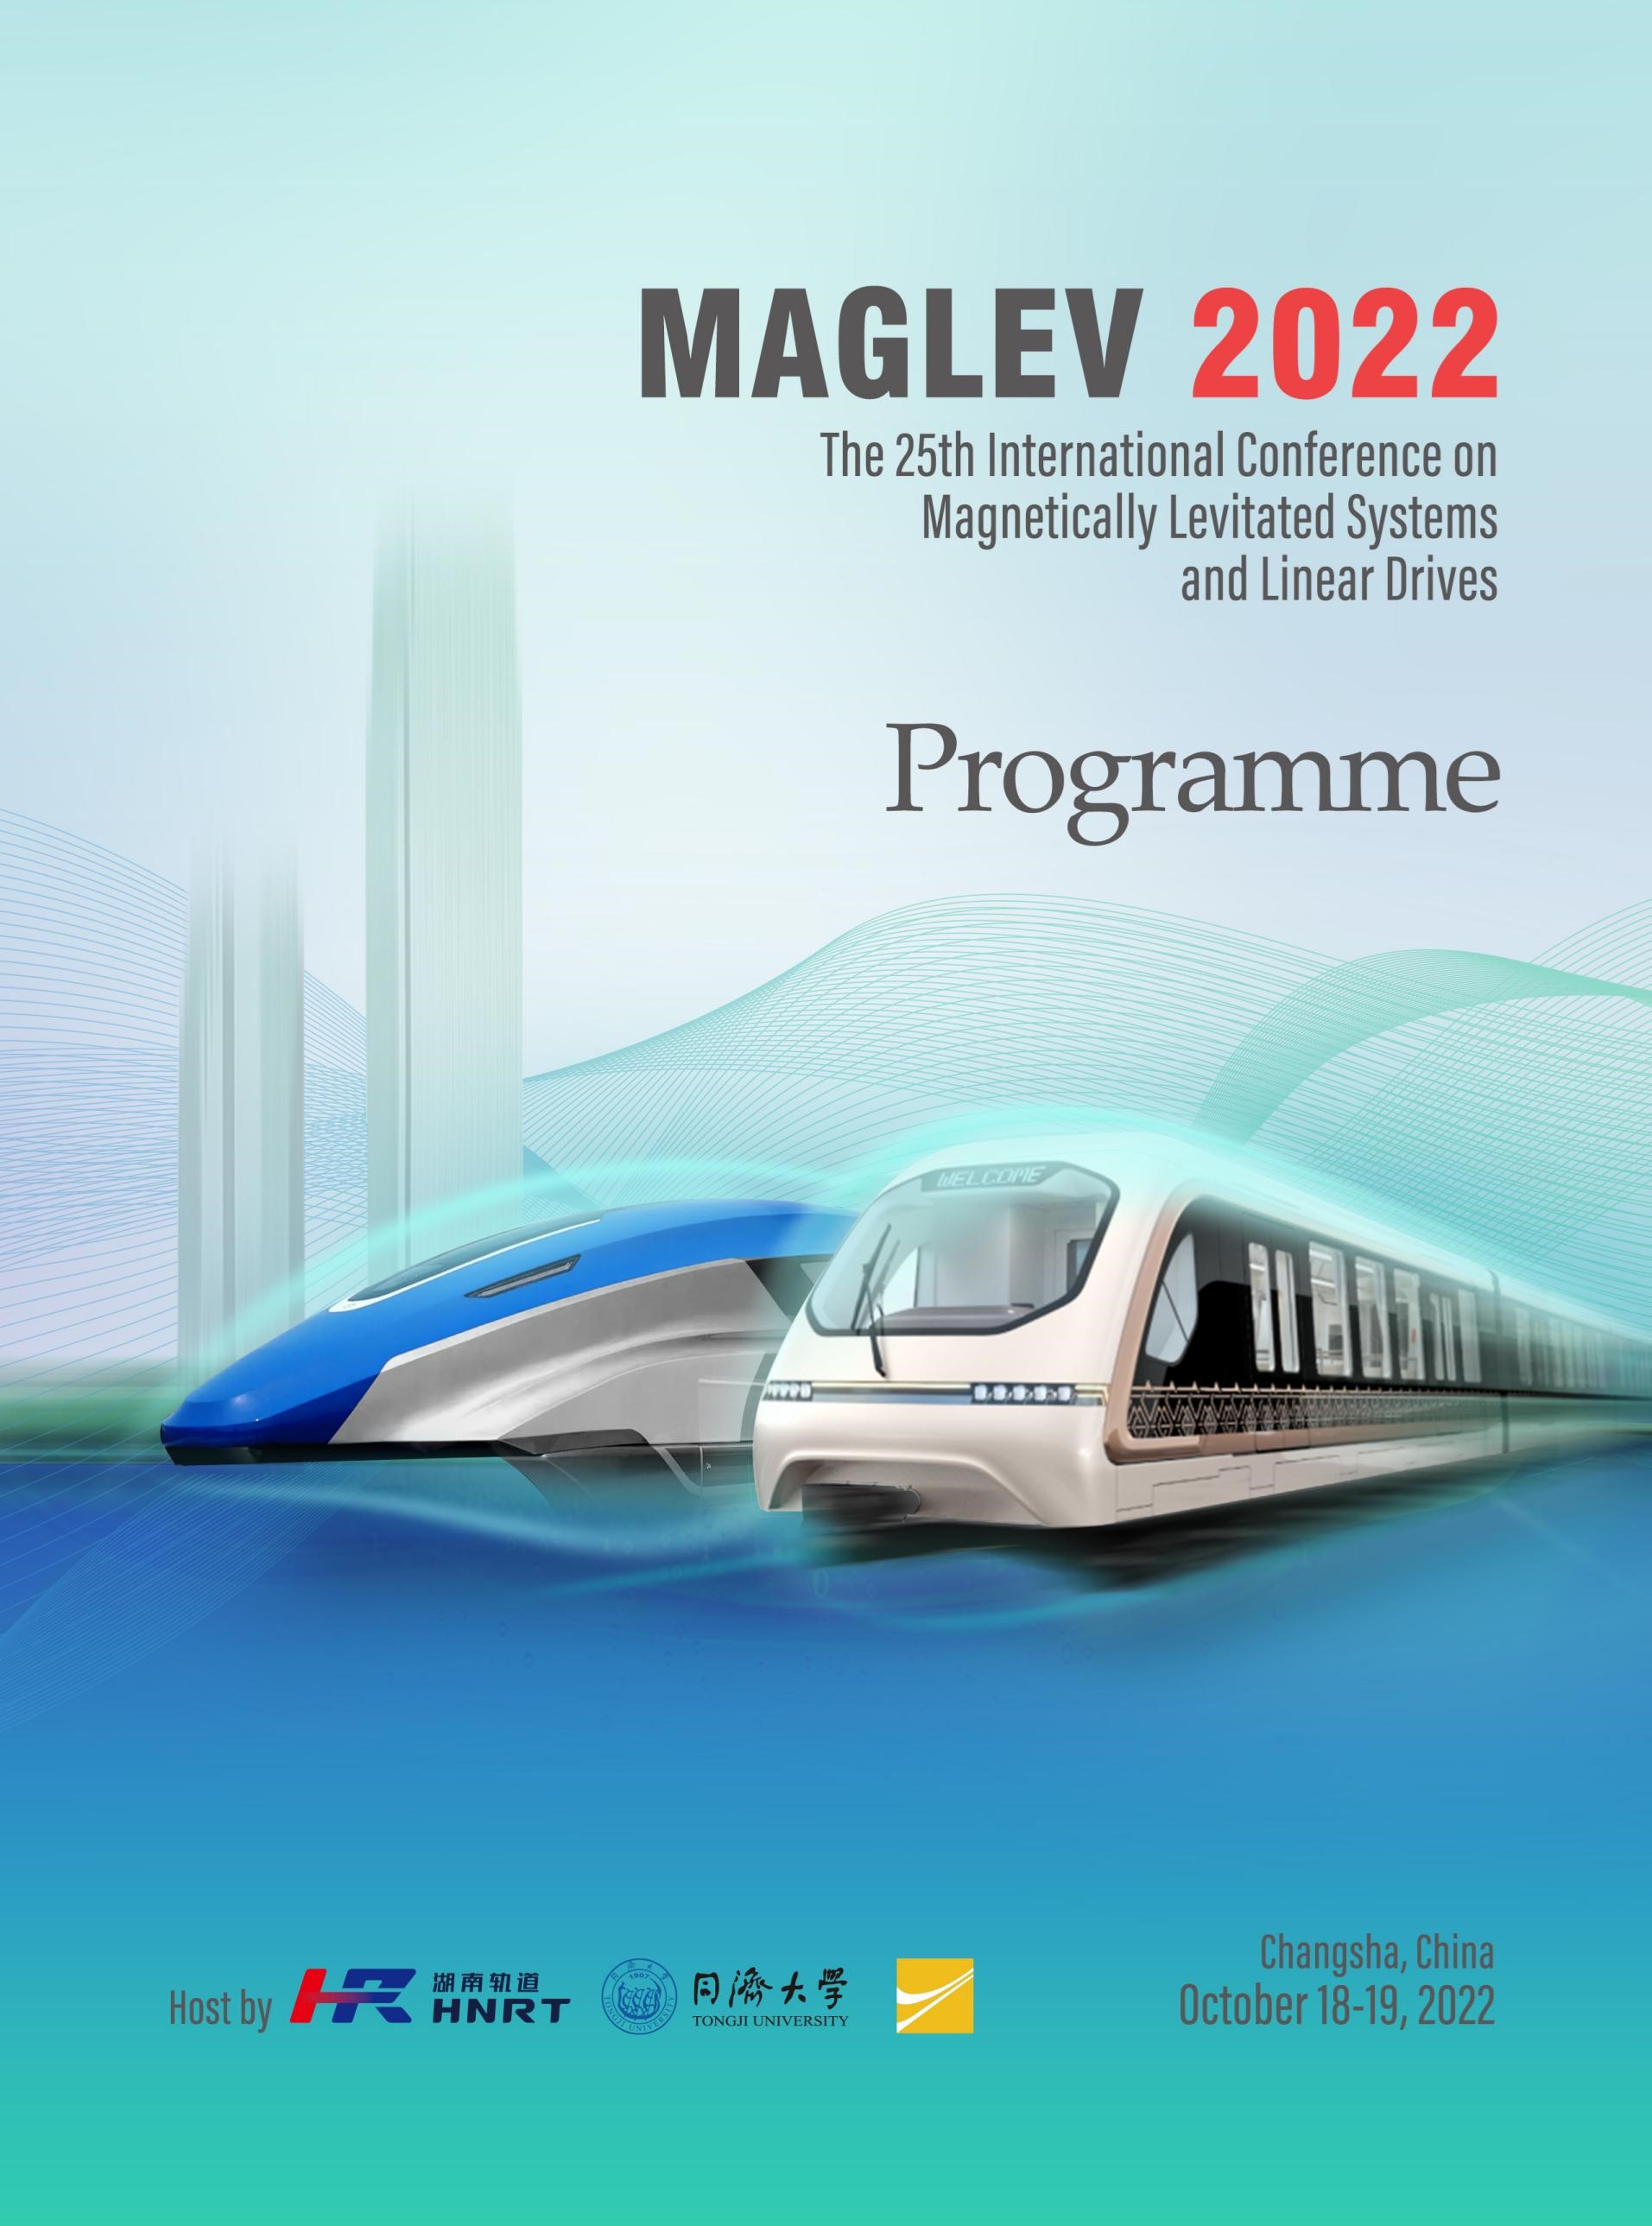 2022 Maglev China Programme Poster